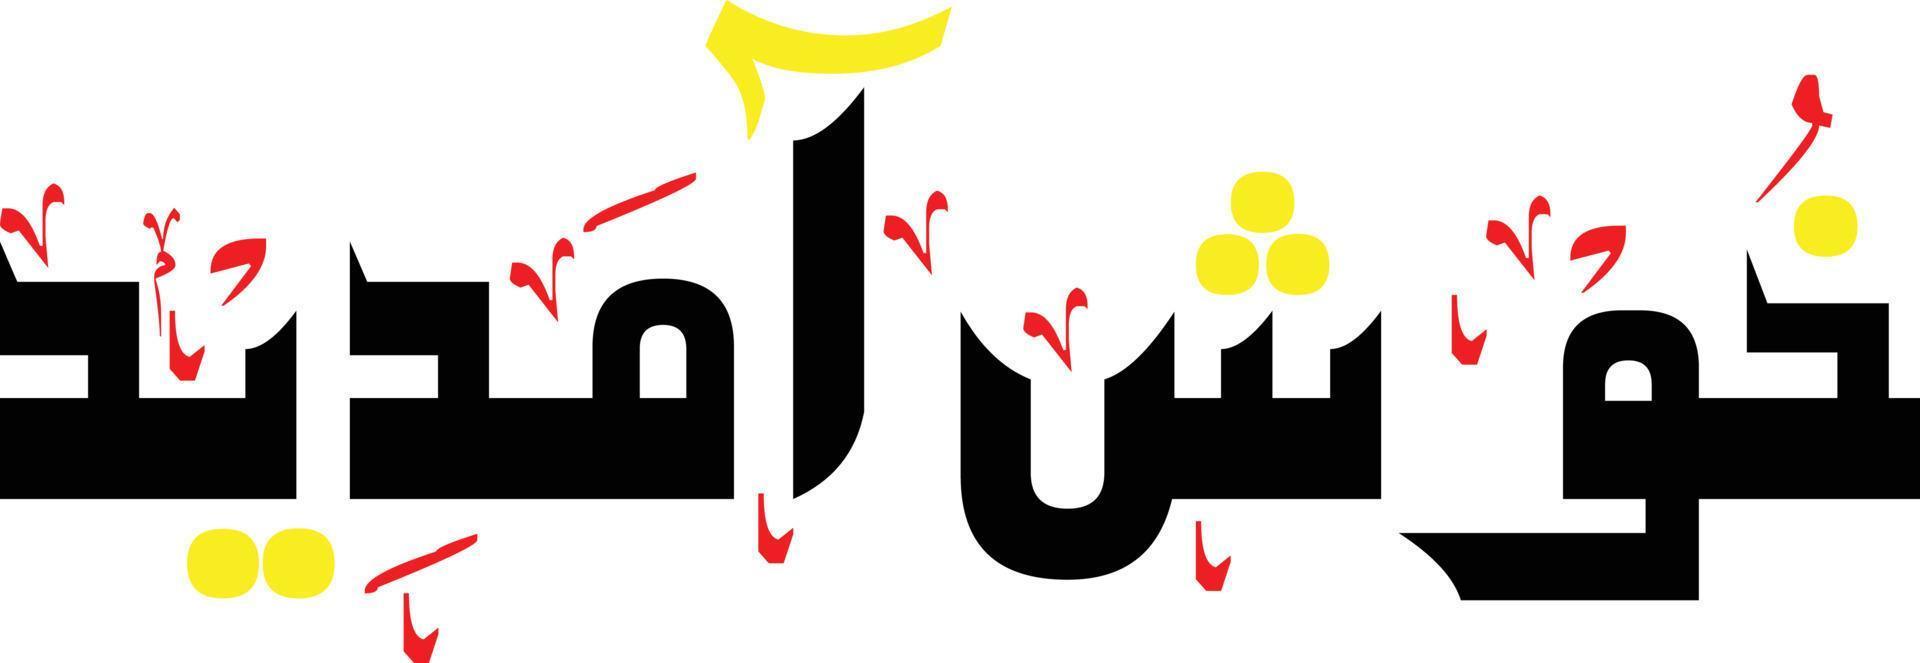 khush aamdeed escrita à mão nastaliq urdu caligrafia, khush amdeed imagem vetorial de caligrafia nastaliq 3d, caligrafia árabe estilo de fonte urdu árabe, lettring urdu árabe, imagem png khush amdeed, vetor